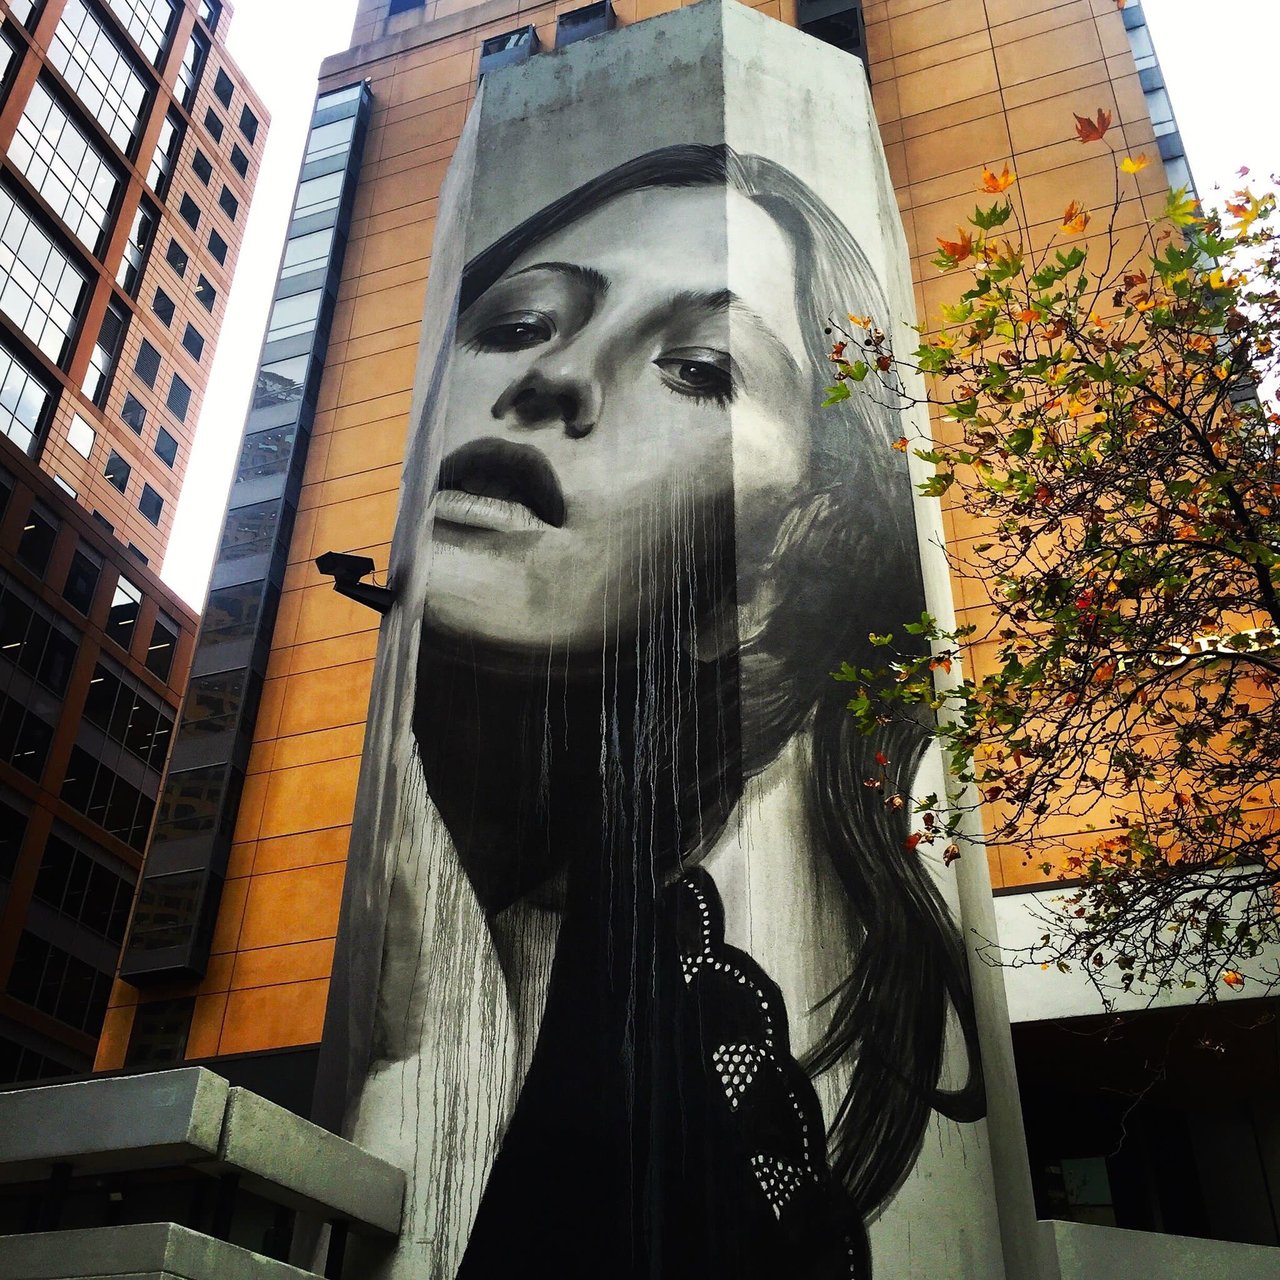 #Mural by Rone #Melbourne #Australia #Streetart #graffiti #art https://t.co/OPYRaTENb5